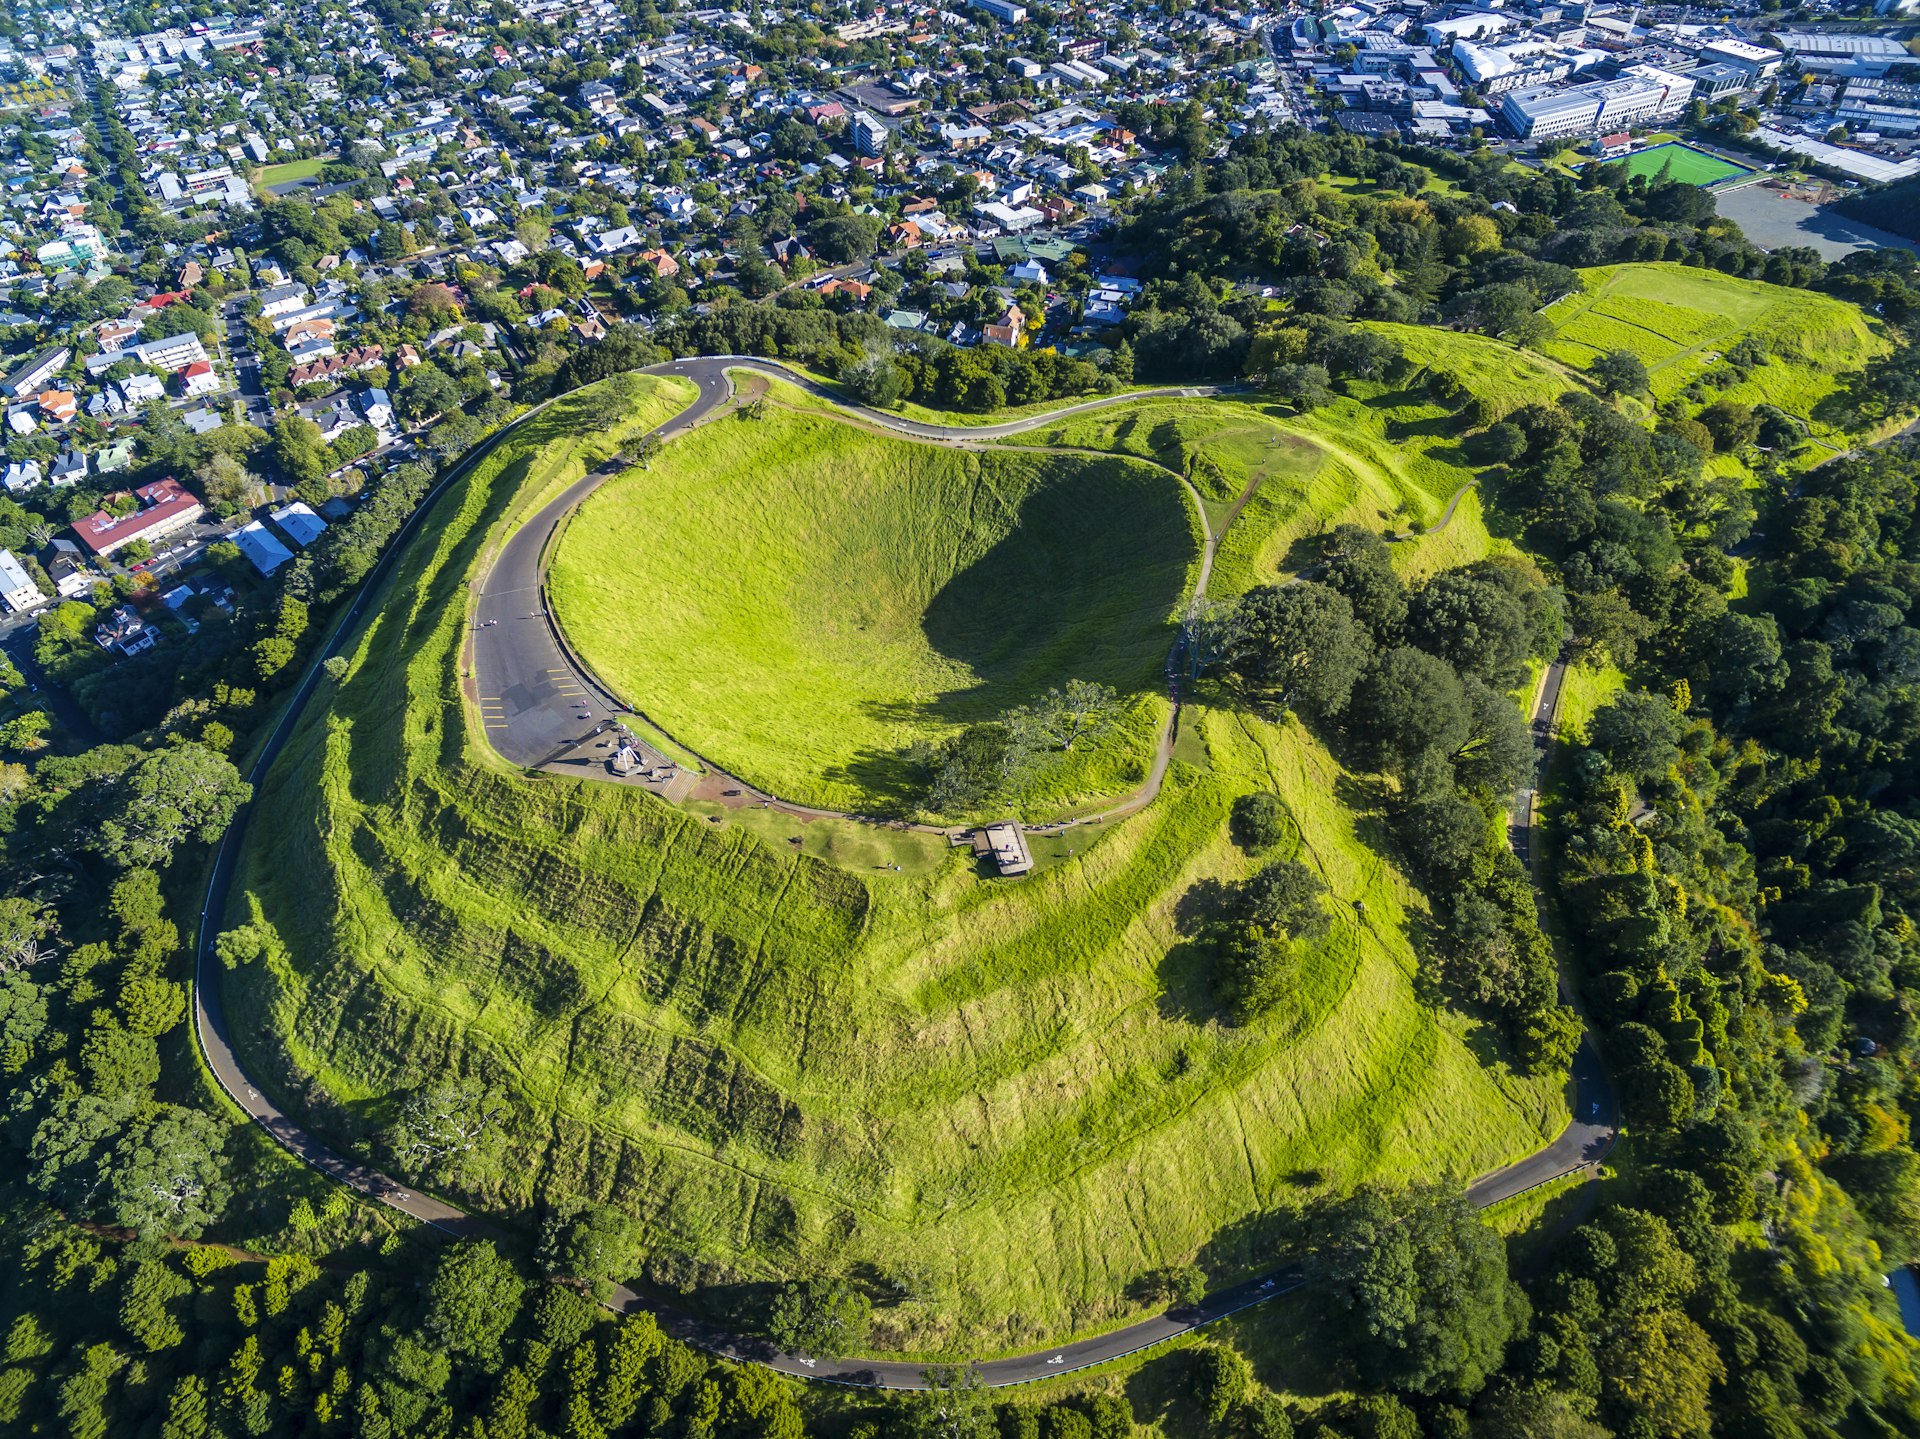 An aerial view of lush Mt Eden/Maungawhau in Auckland